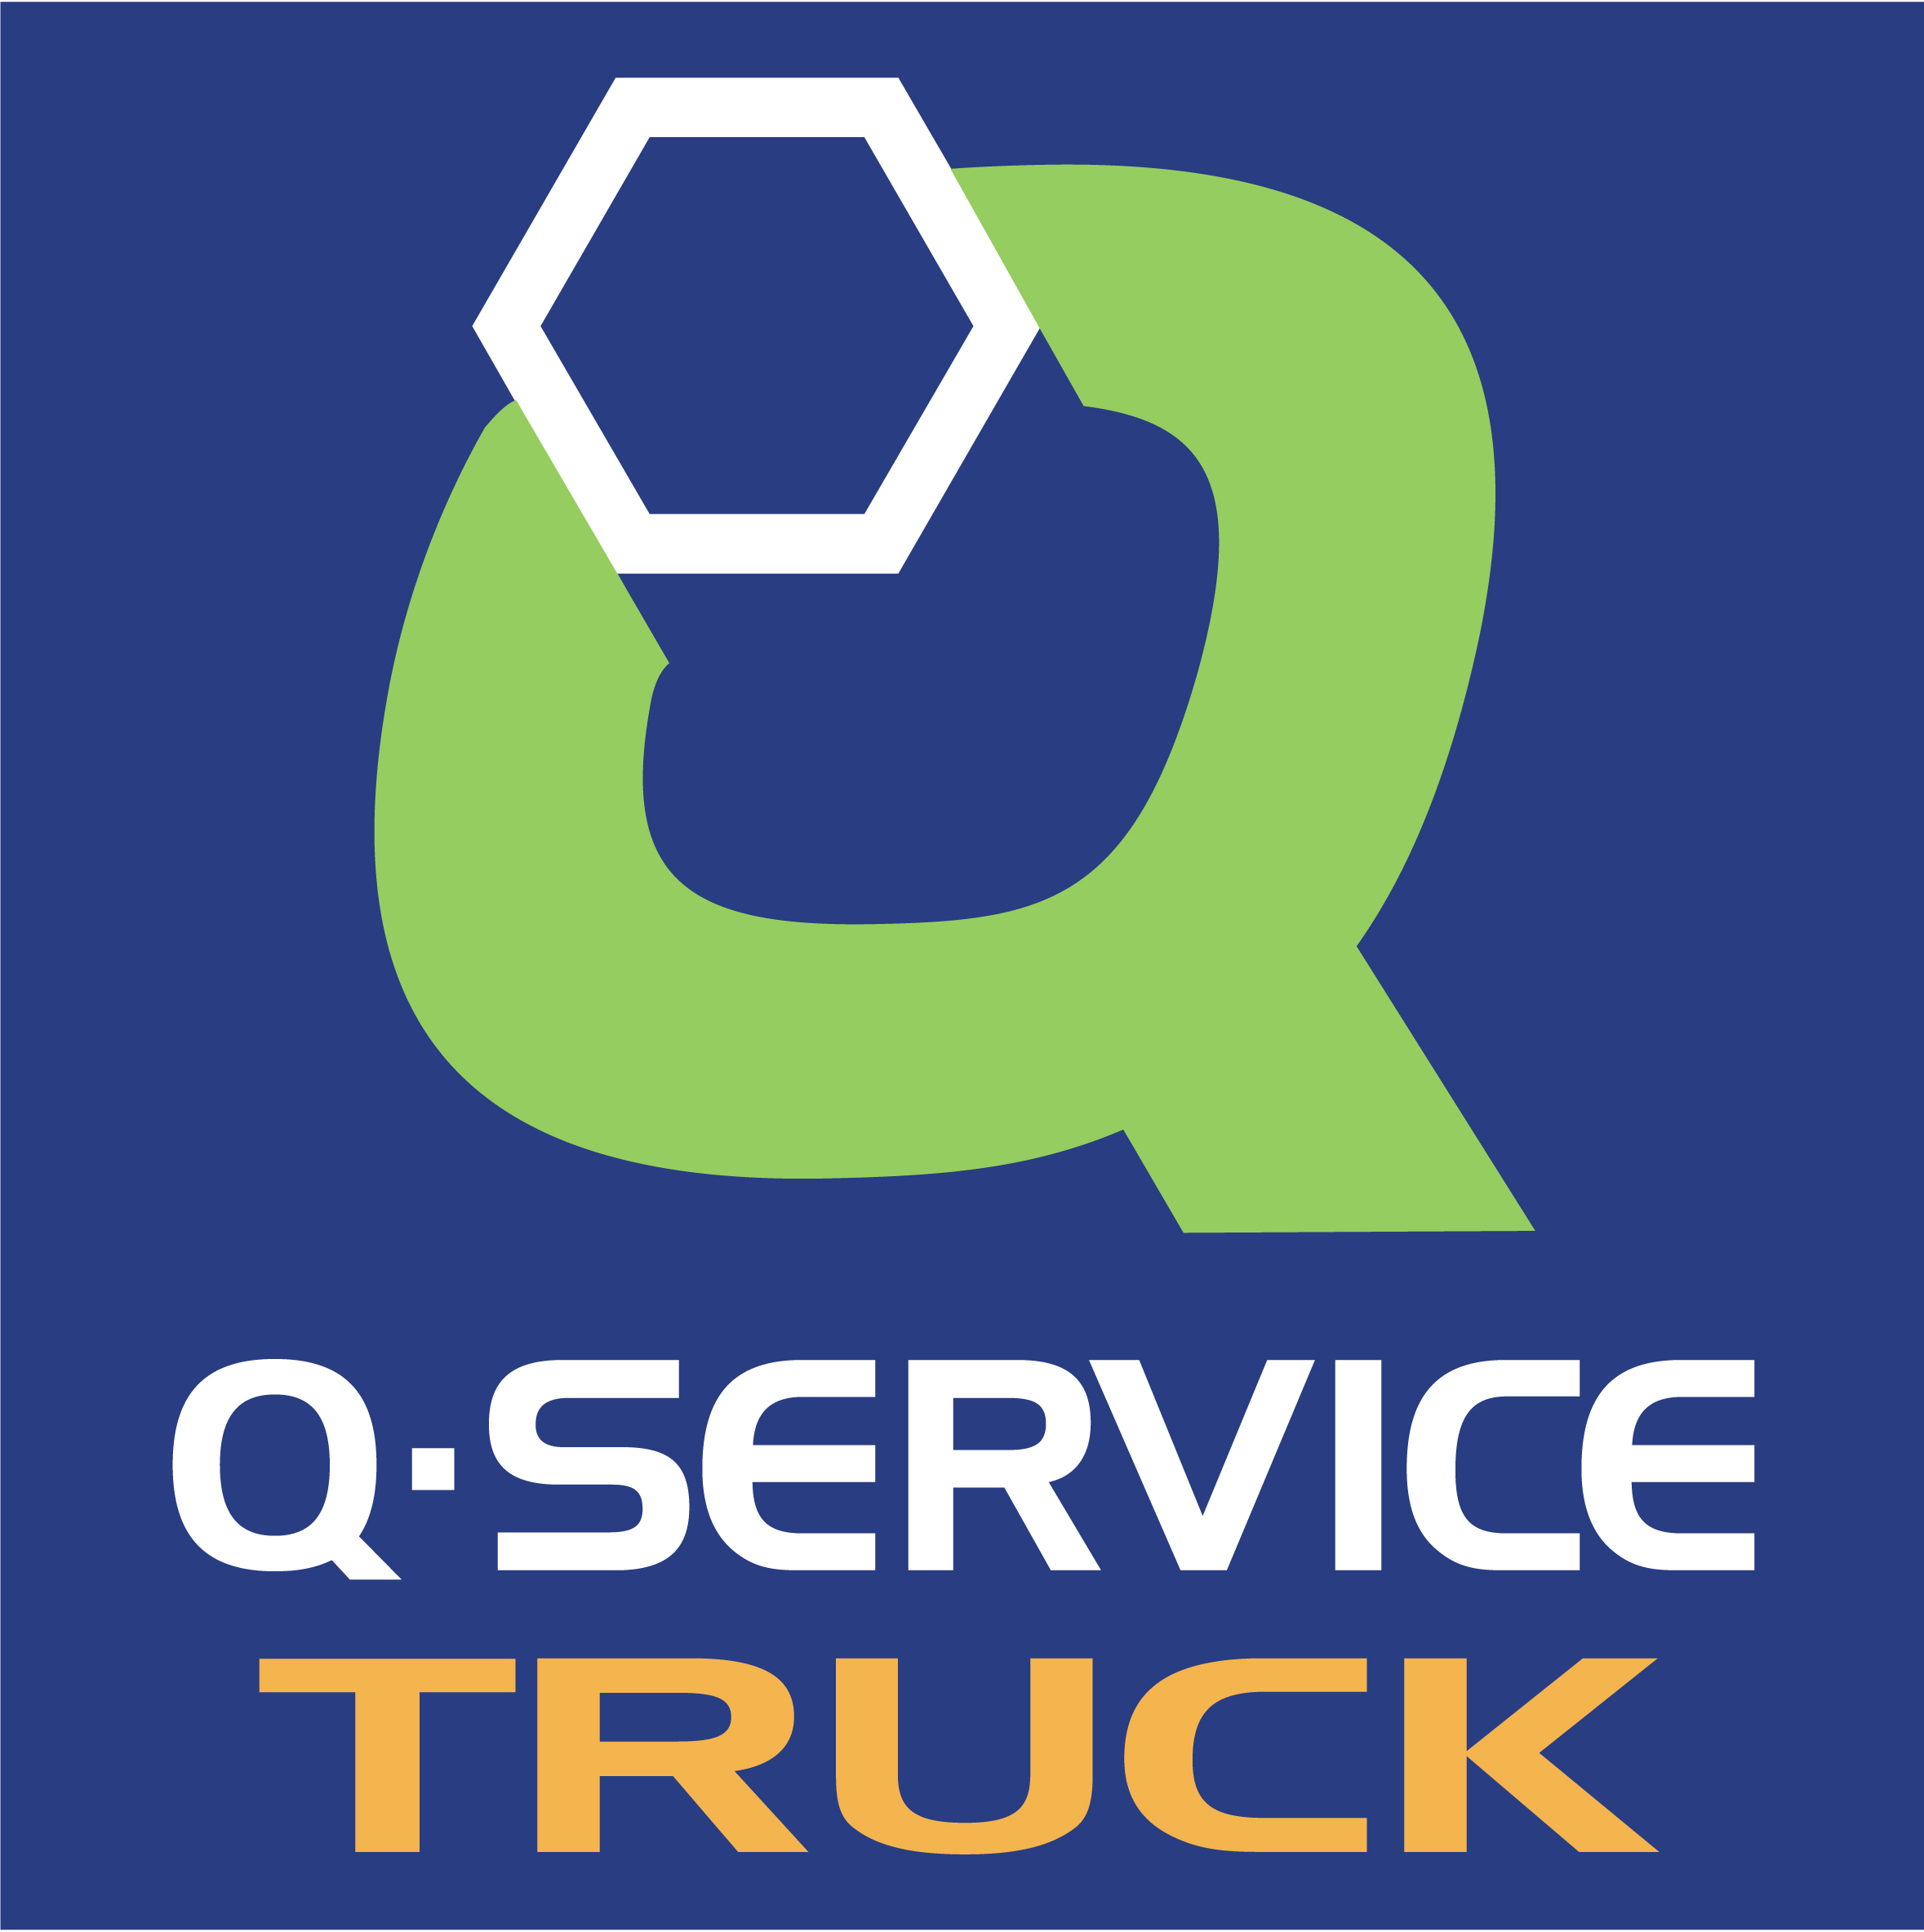 Q SERVICE truck logo